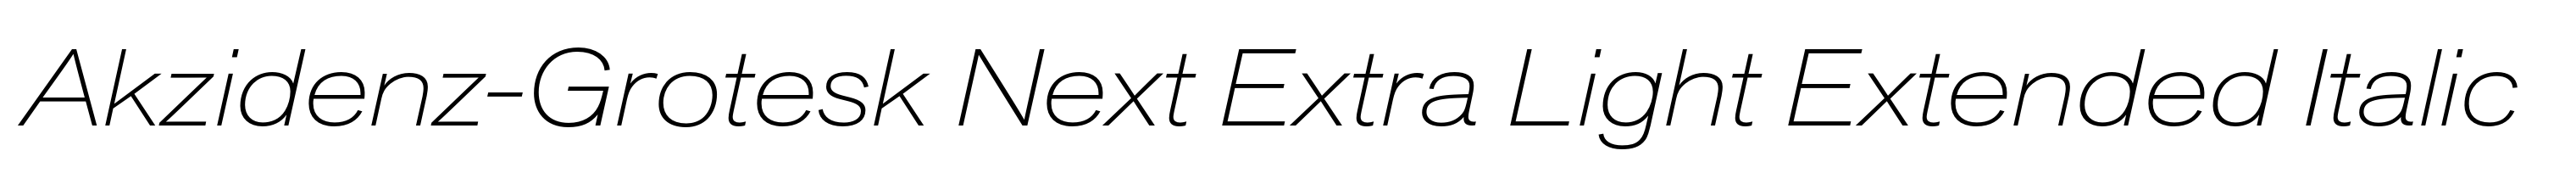 Akzidenz-Grotesk Next Extra Light Extended Italic